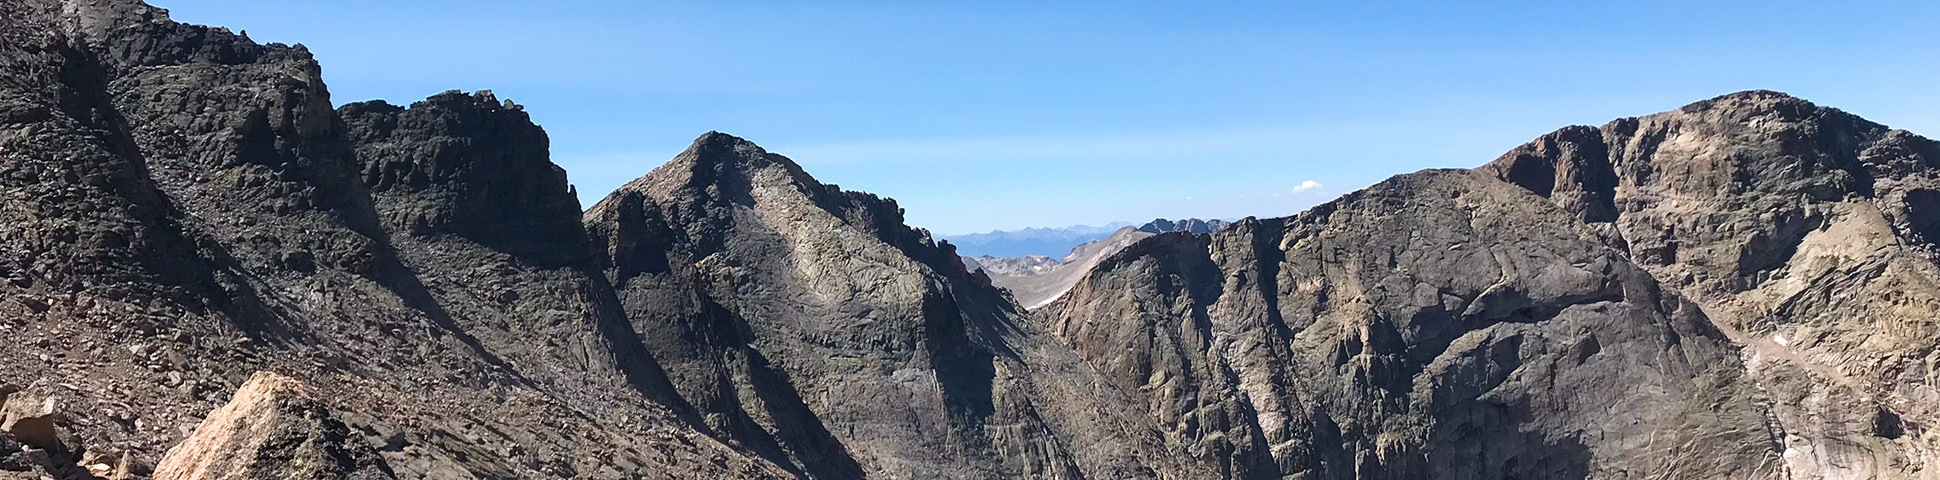 Beautiful panorama from Longs Peak scramble in Rocky Mountain National Park